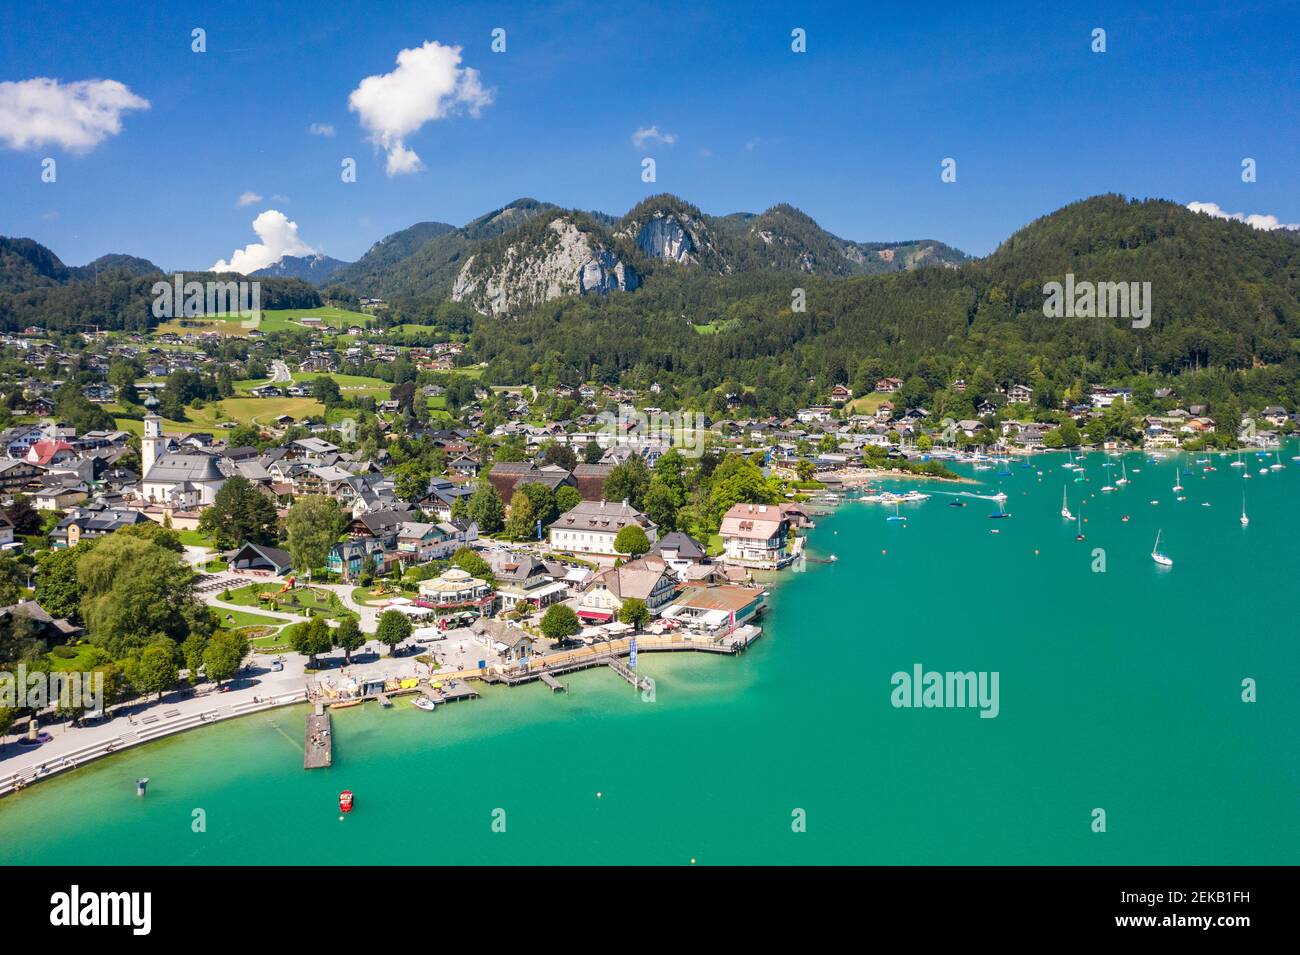 Austria, Salzburg, Sankt Gilgen, Aerial view of village on shore of Lake Wolfgang in summer Stock Photo